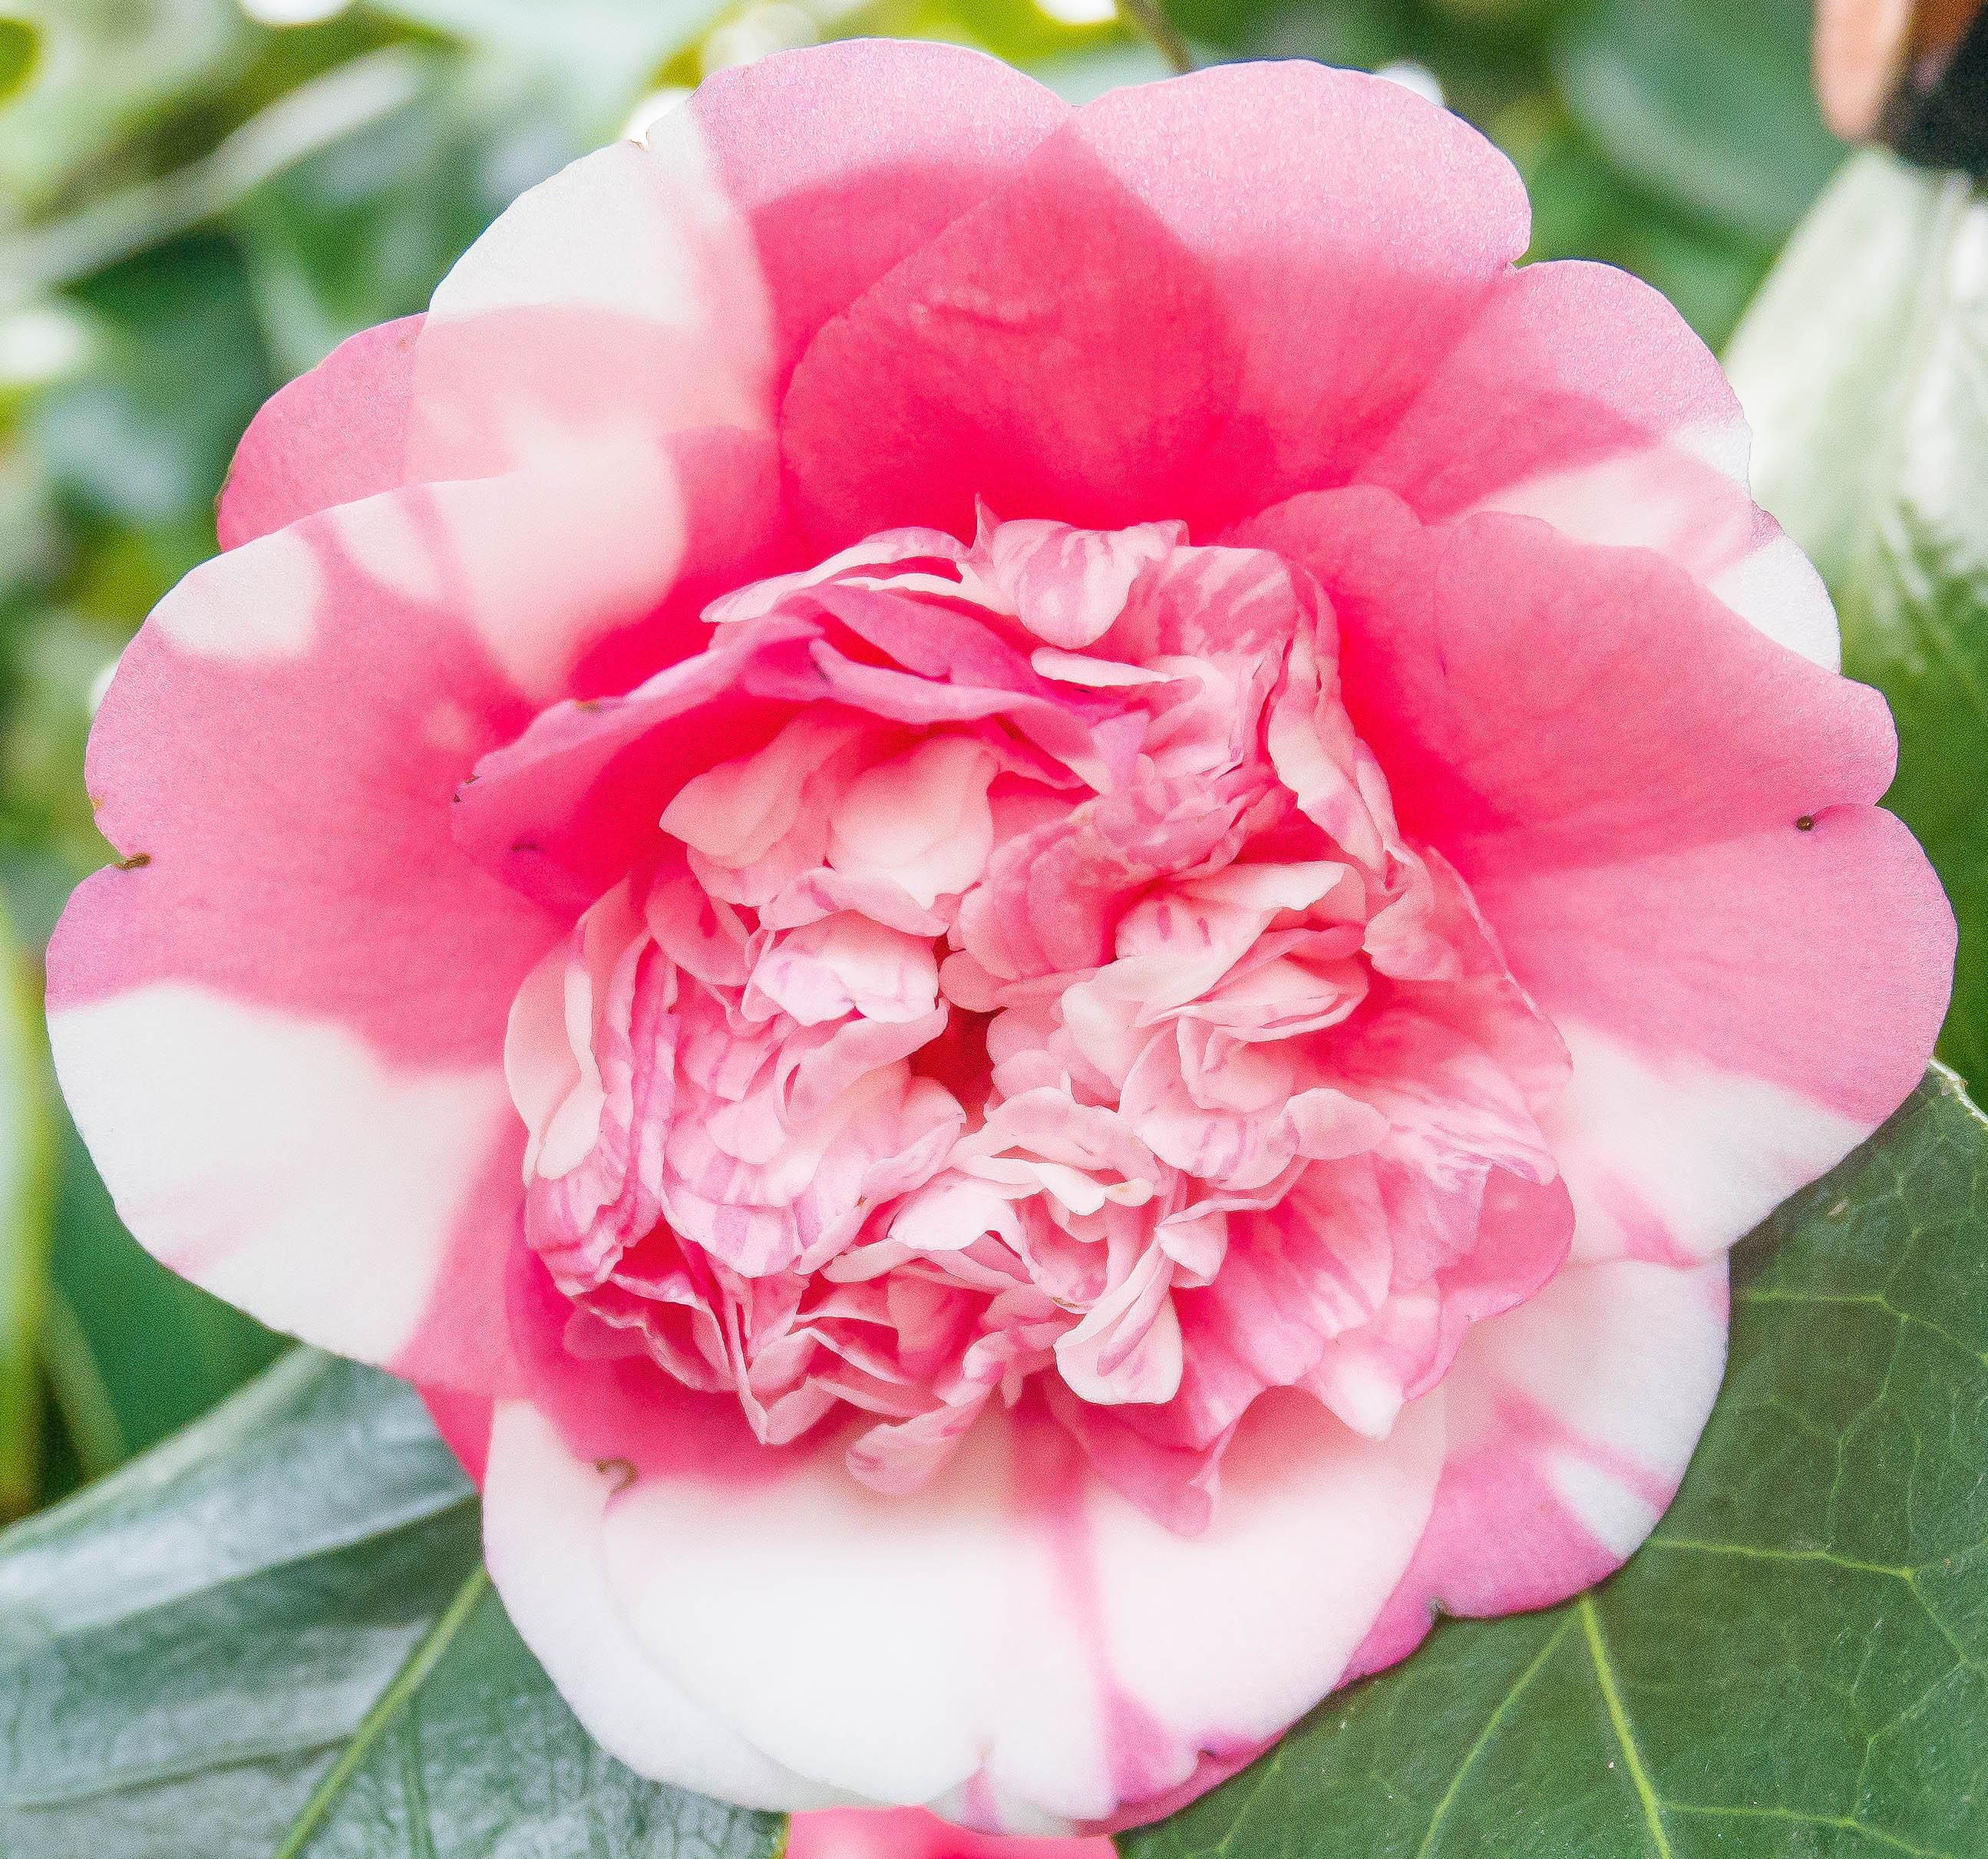 Camellia.jpg